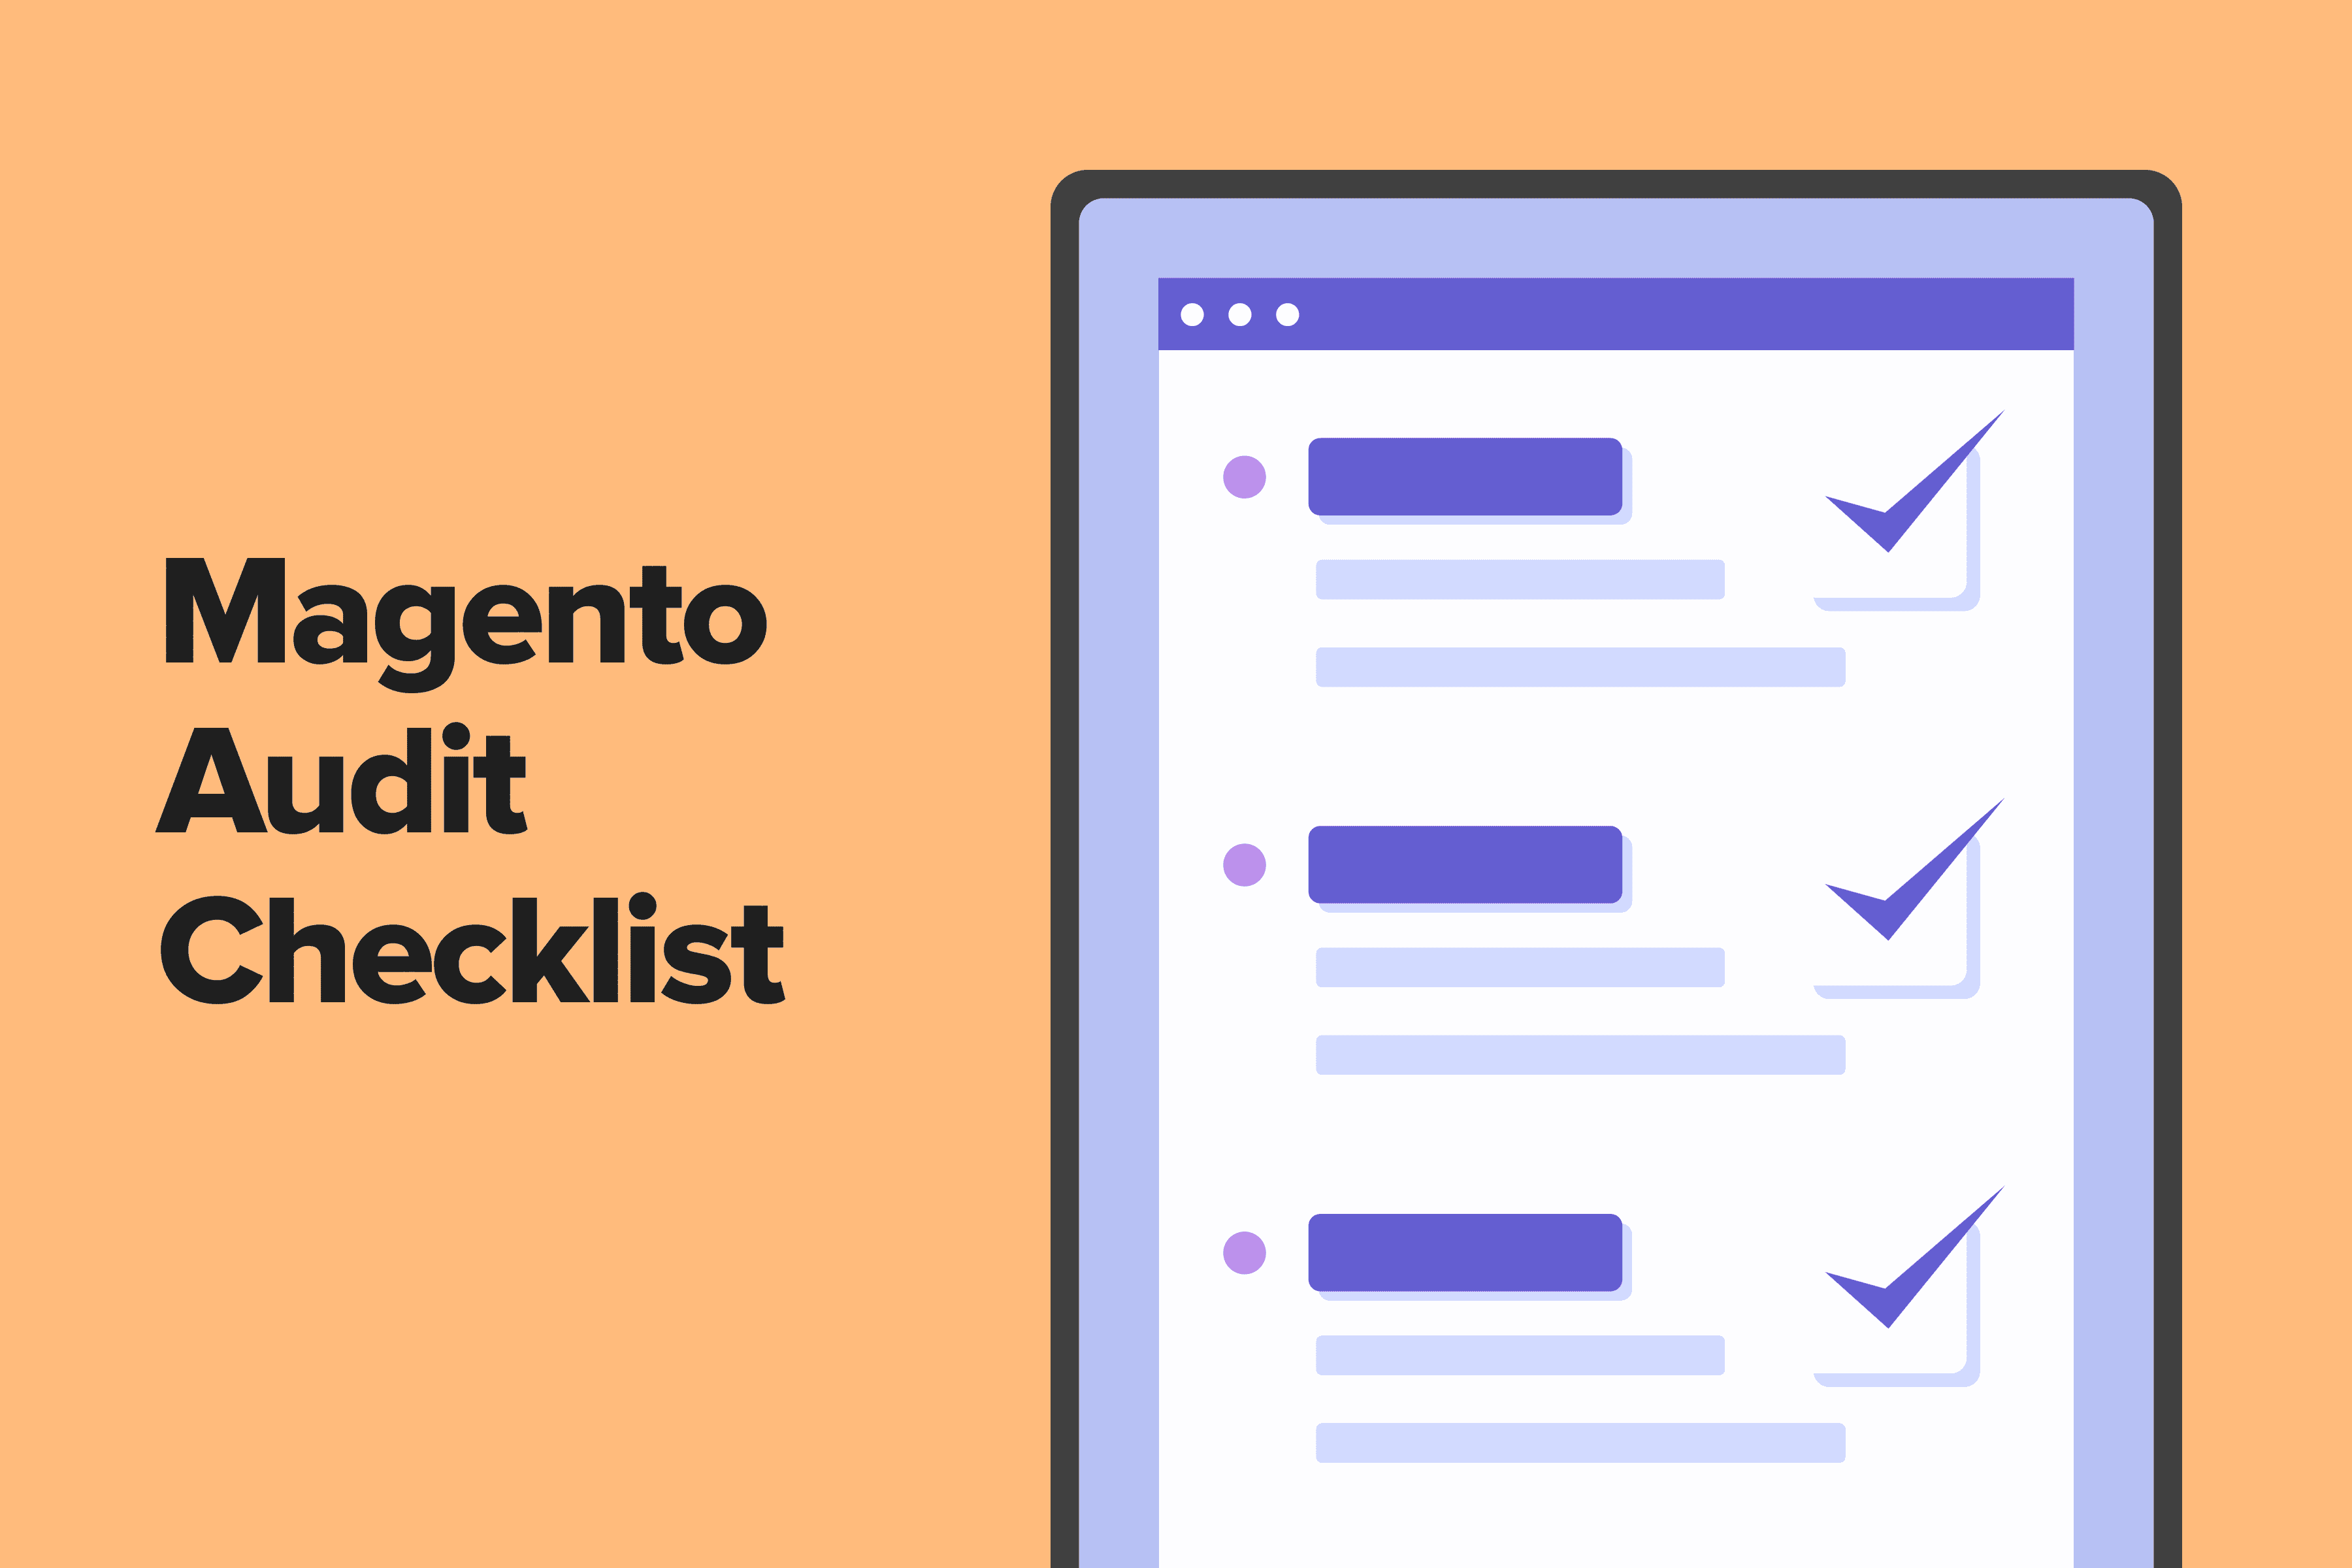 Magento Audit Checklist